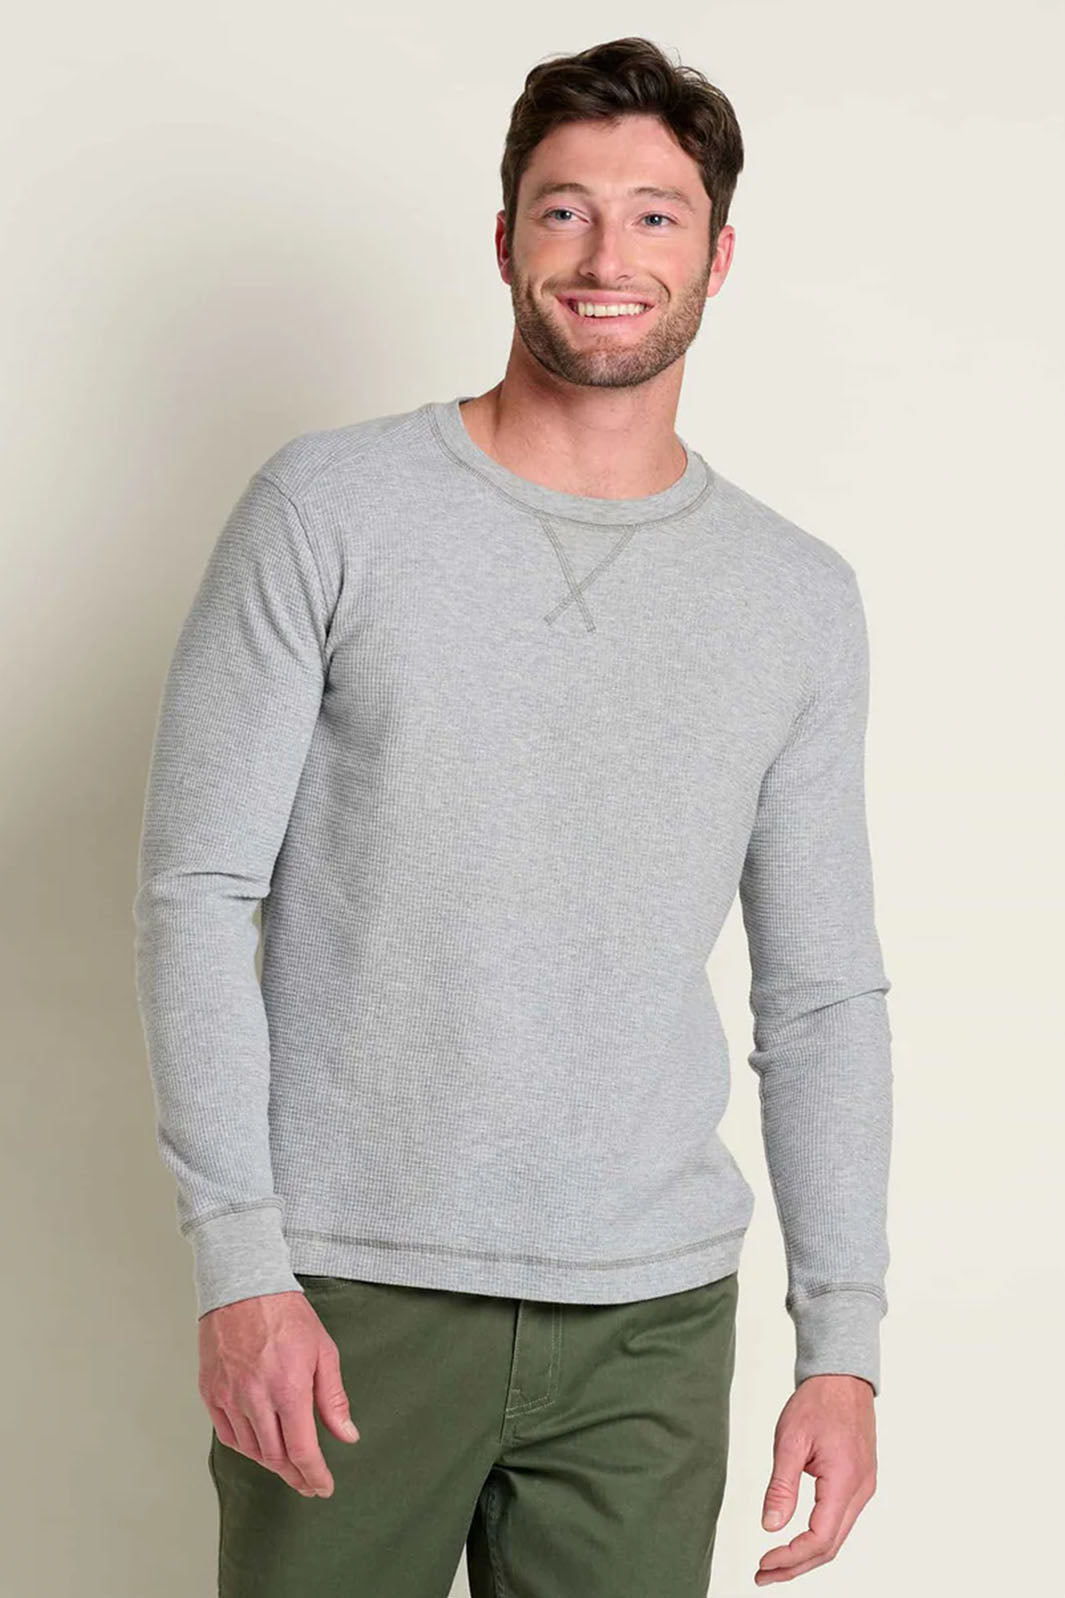 Smiling man wearing a grey heather henley shirt. 